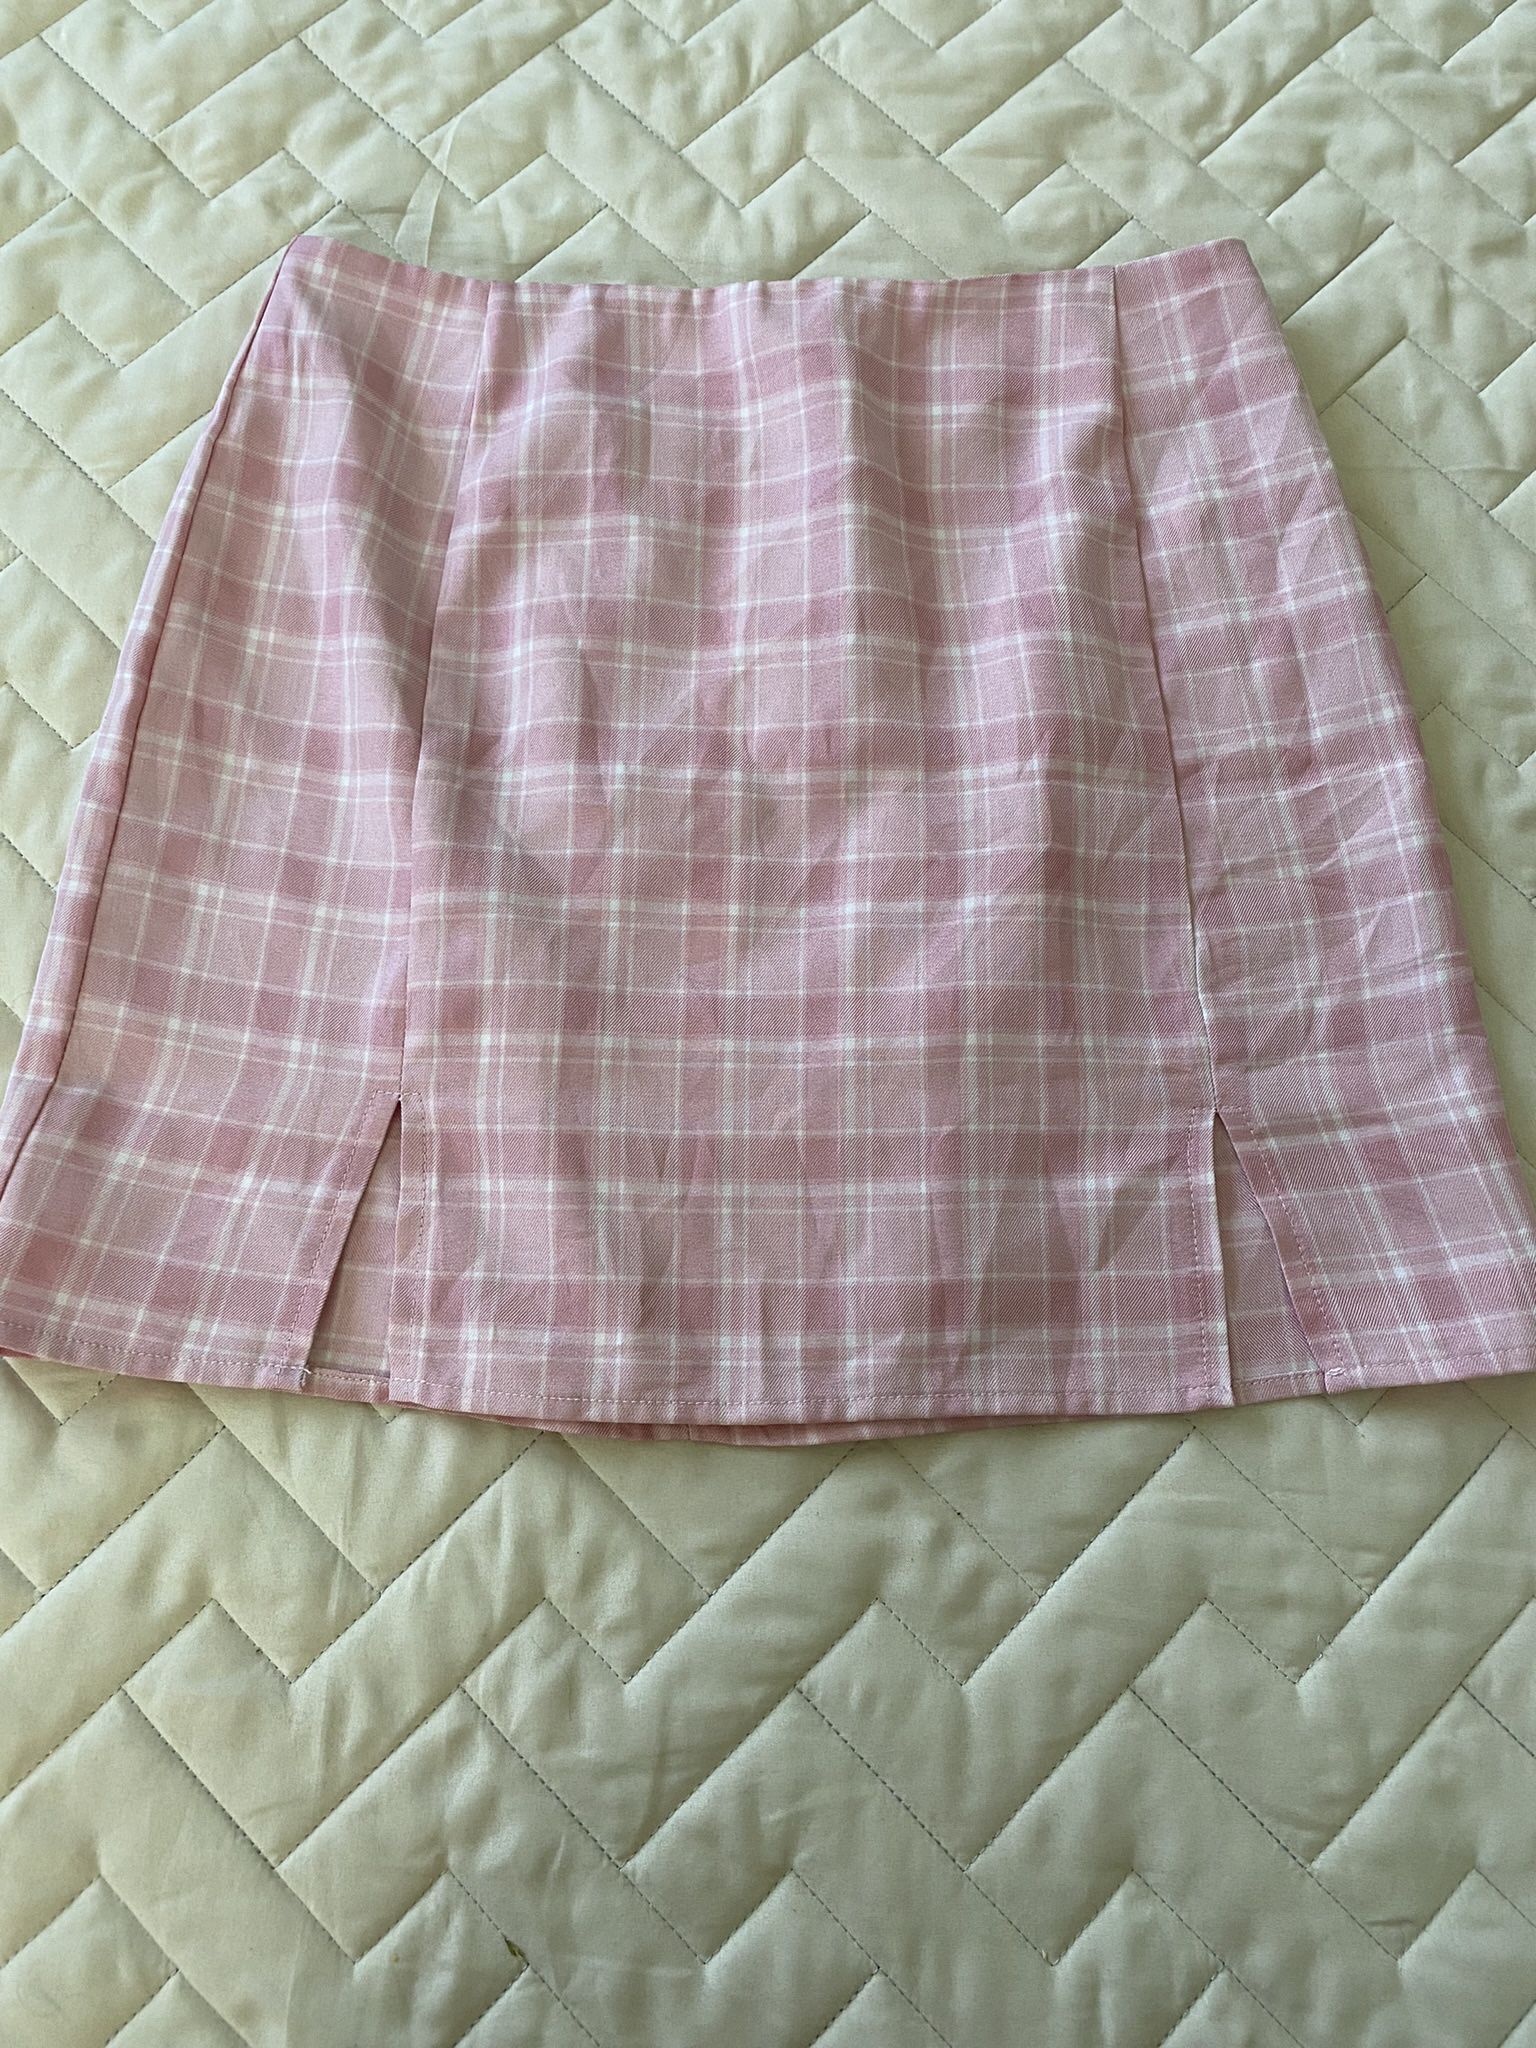 Juniors Small Skirt